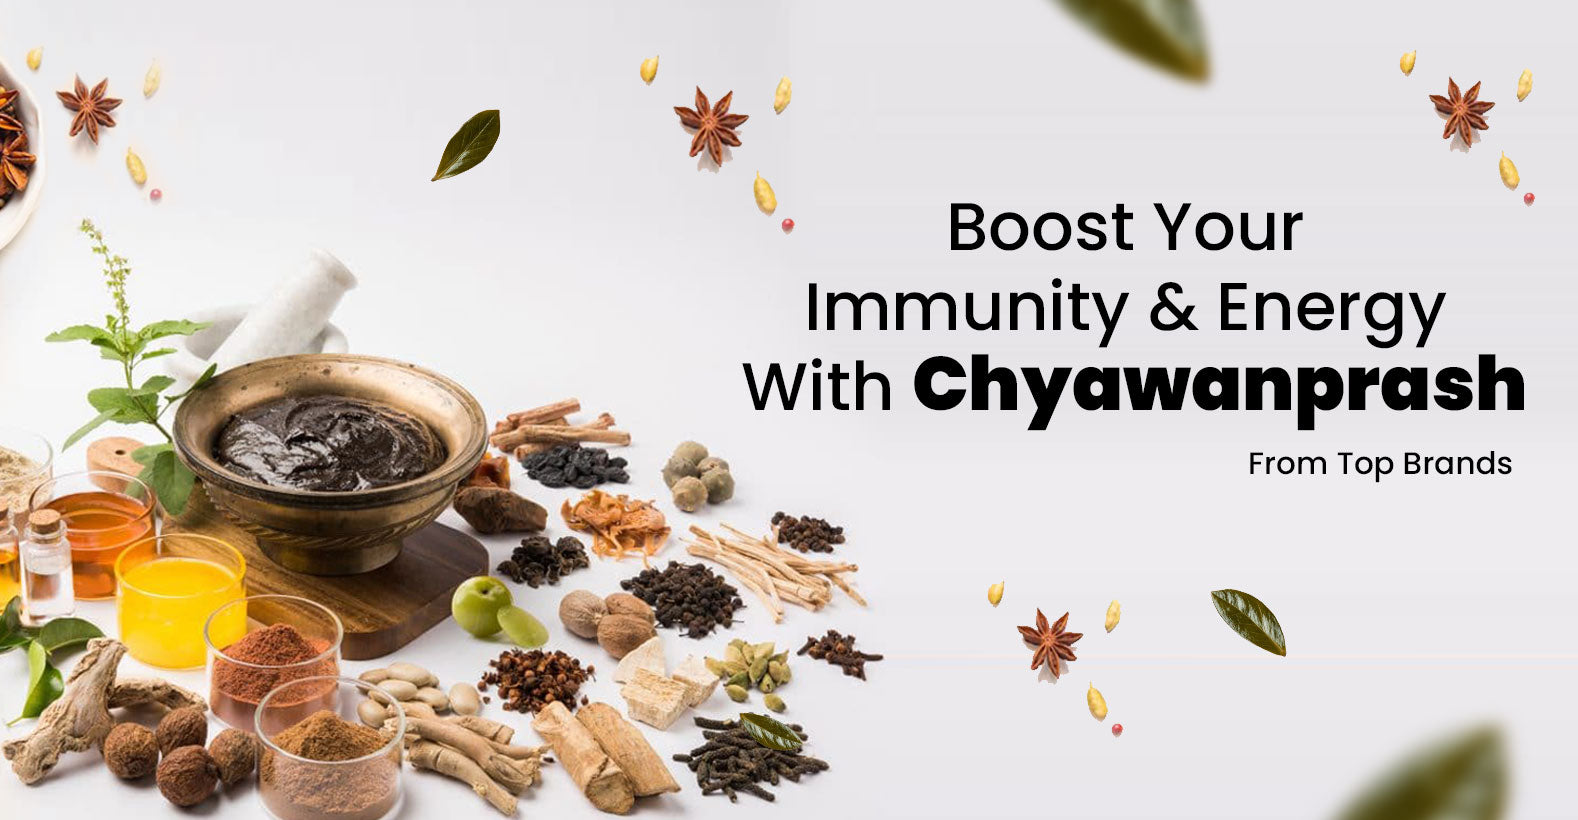 Chyawanprash As Immunity Boosters